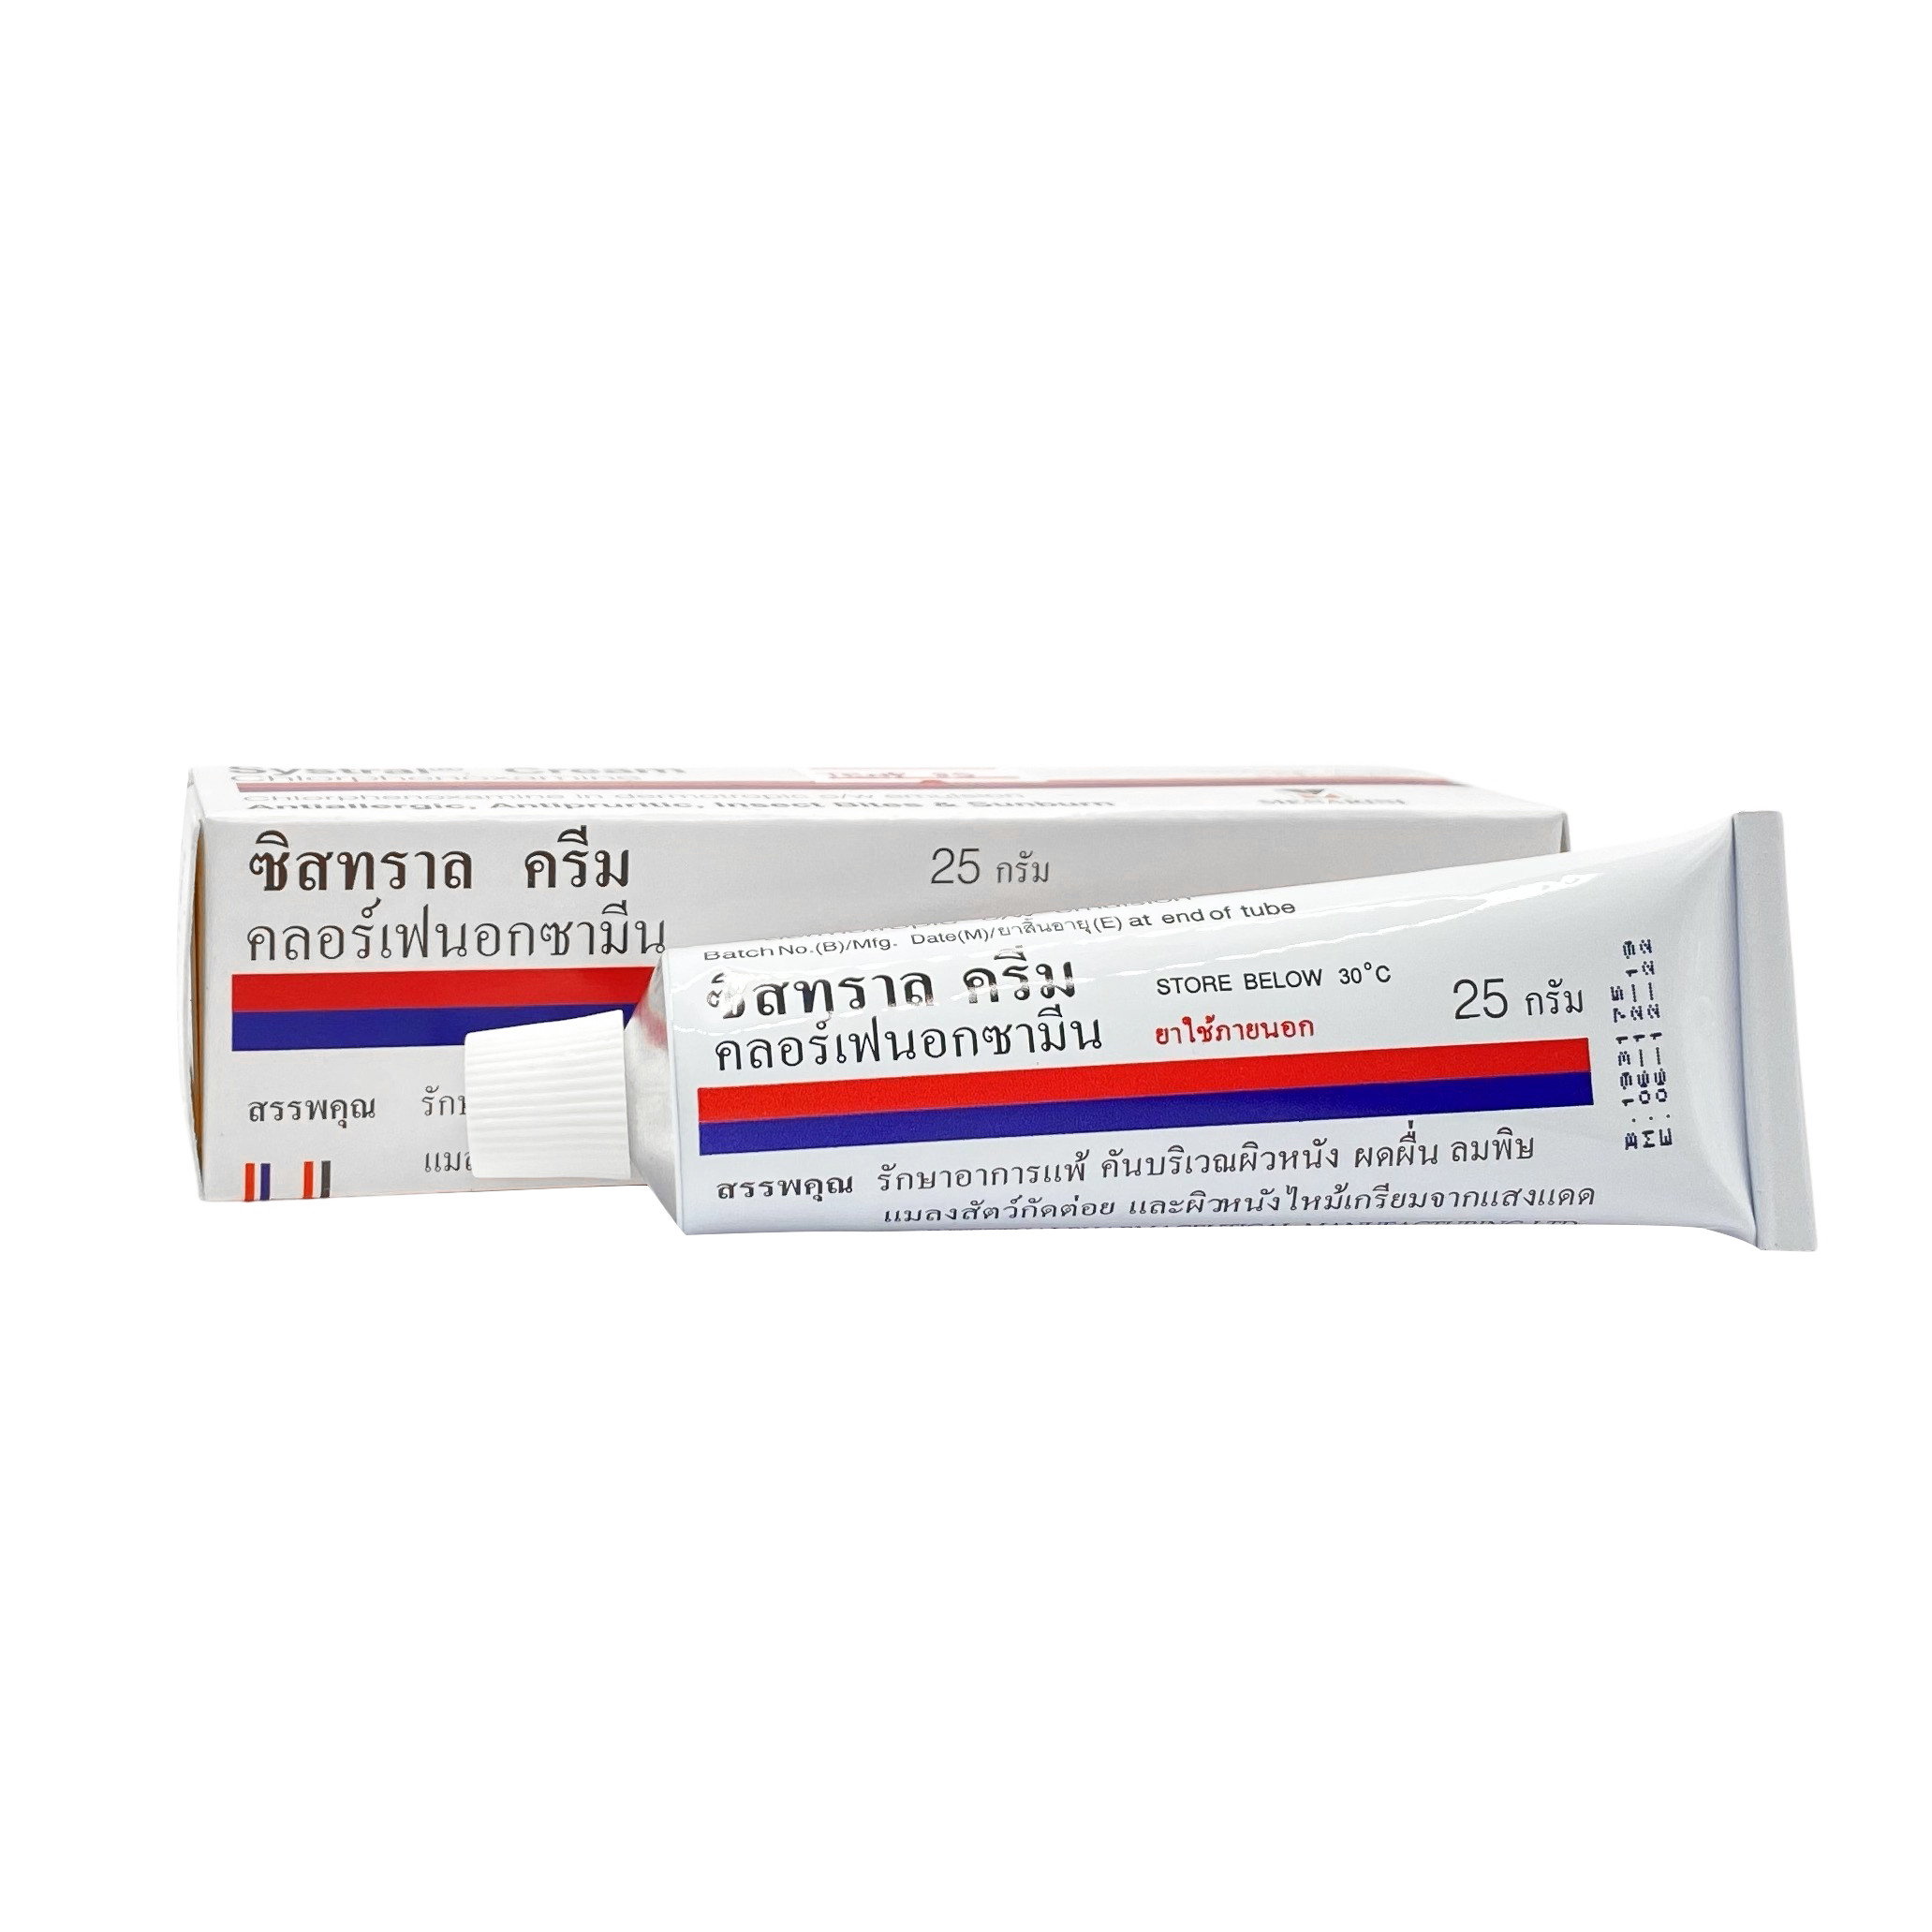 Systral Cream (Chlorphenoxamine Cream 150%W/W) ยาทาแก้แพ้แก้คัน ซีสทราล ครีม  ขนาด 25 กรัม/หลอด - สั่งยาออนไลน์